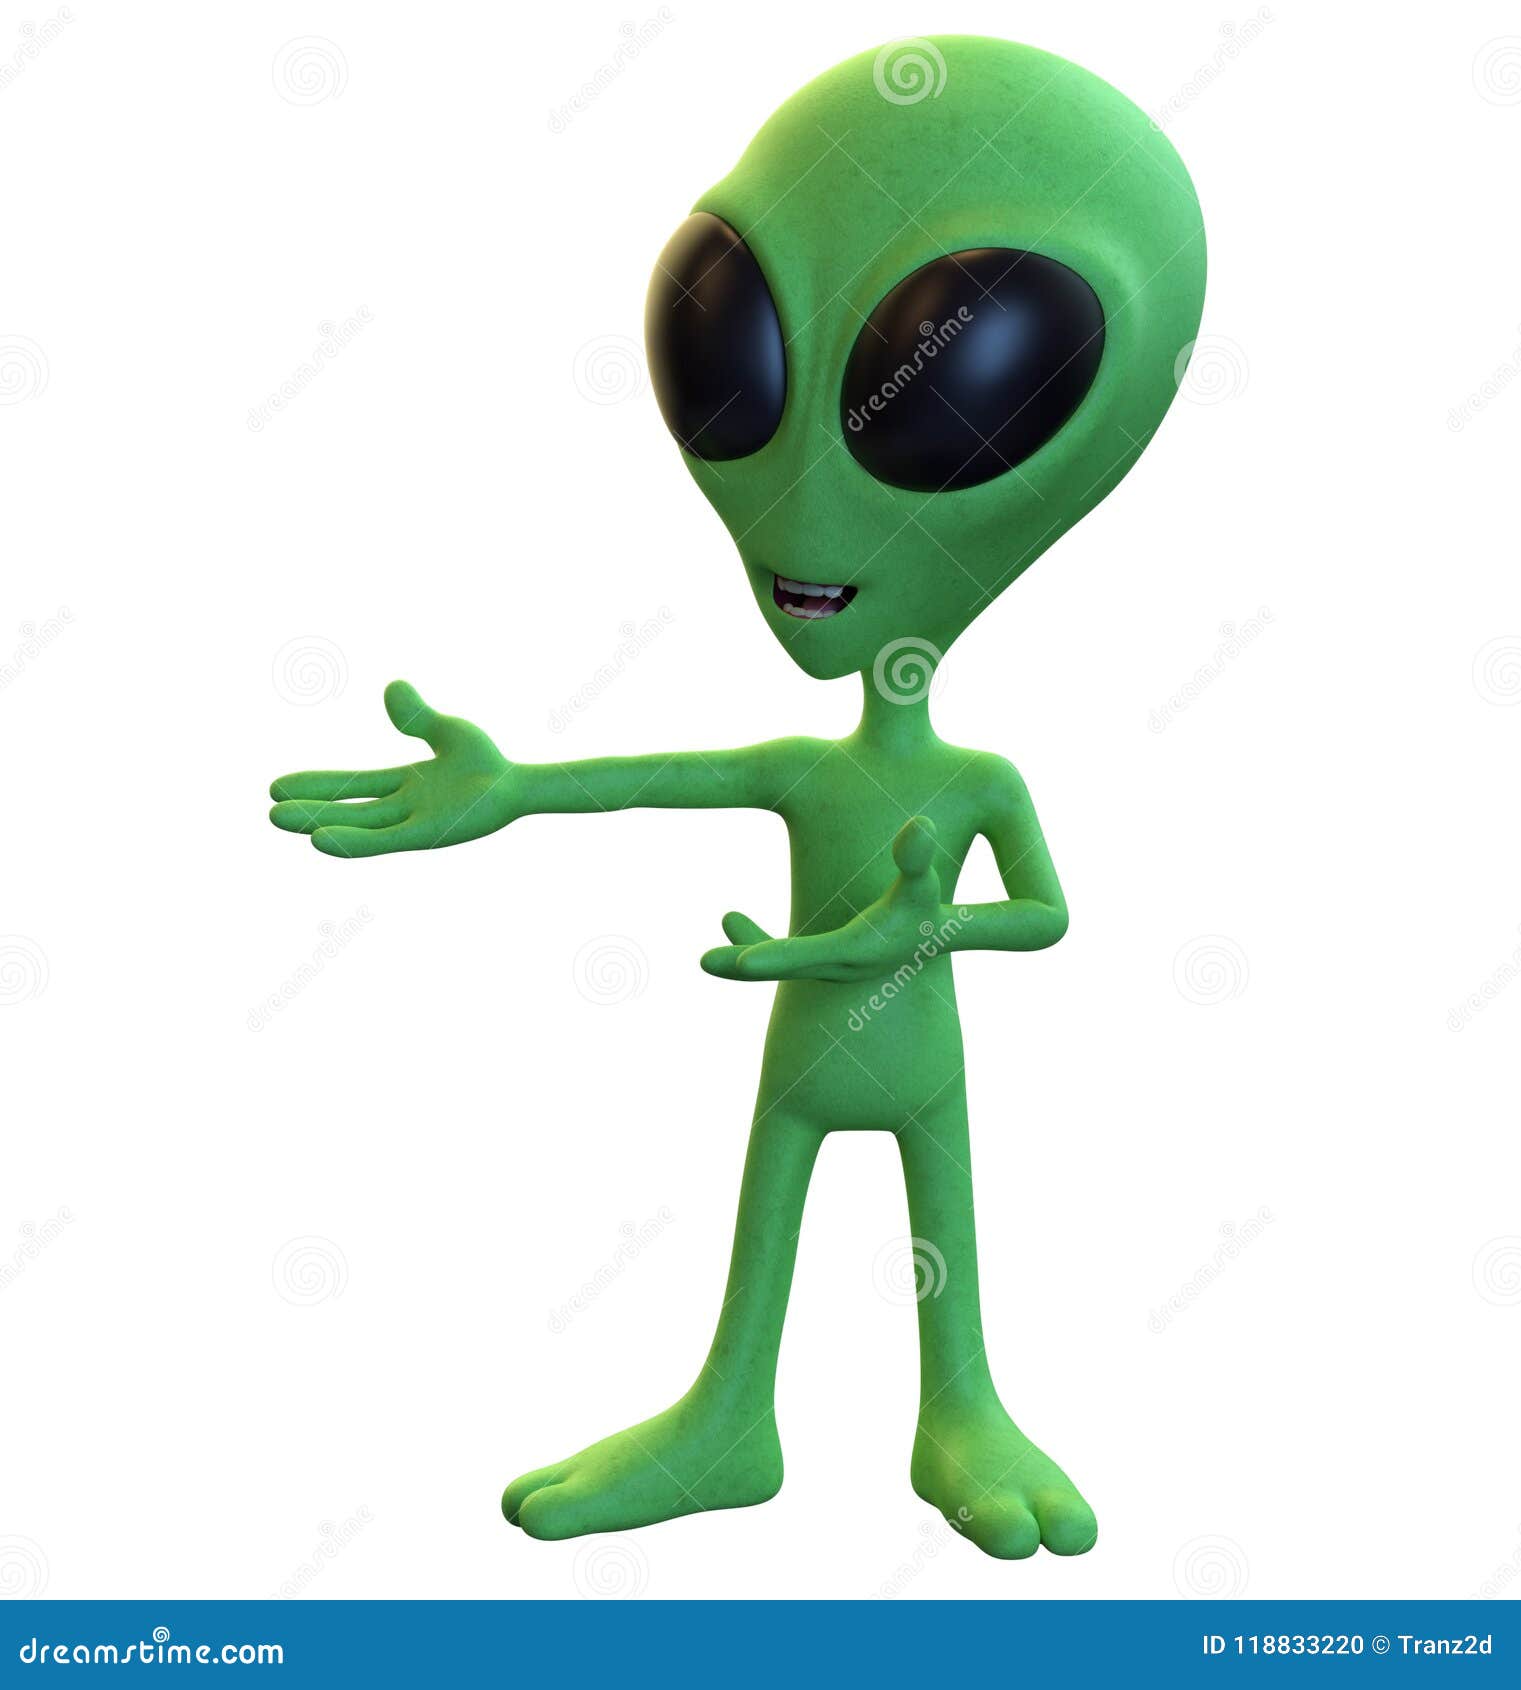 green cartoon alien presenting to the left